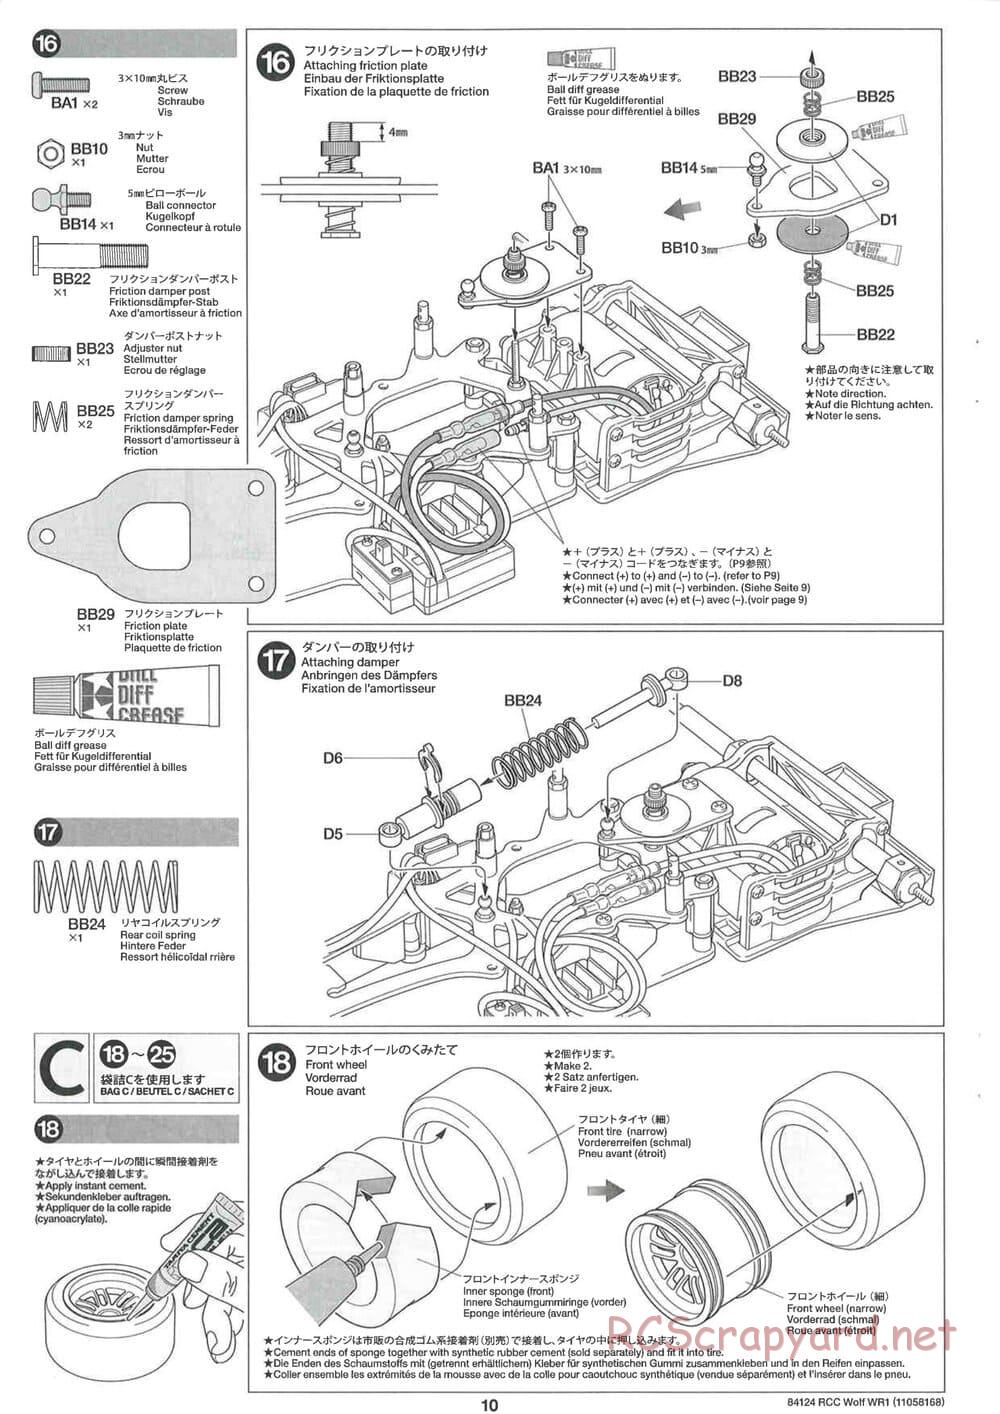 Tamiya - Wolf WR1 - F104W Chassis - Manual - Page 10